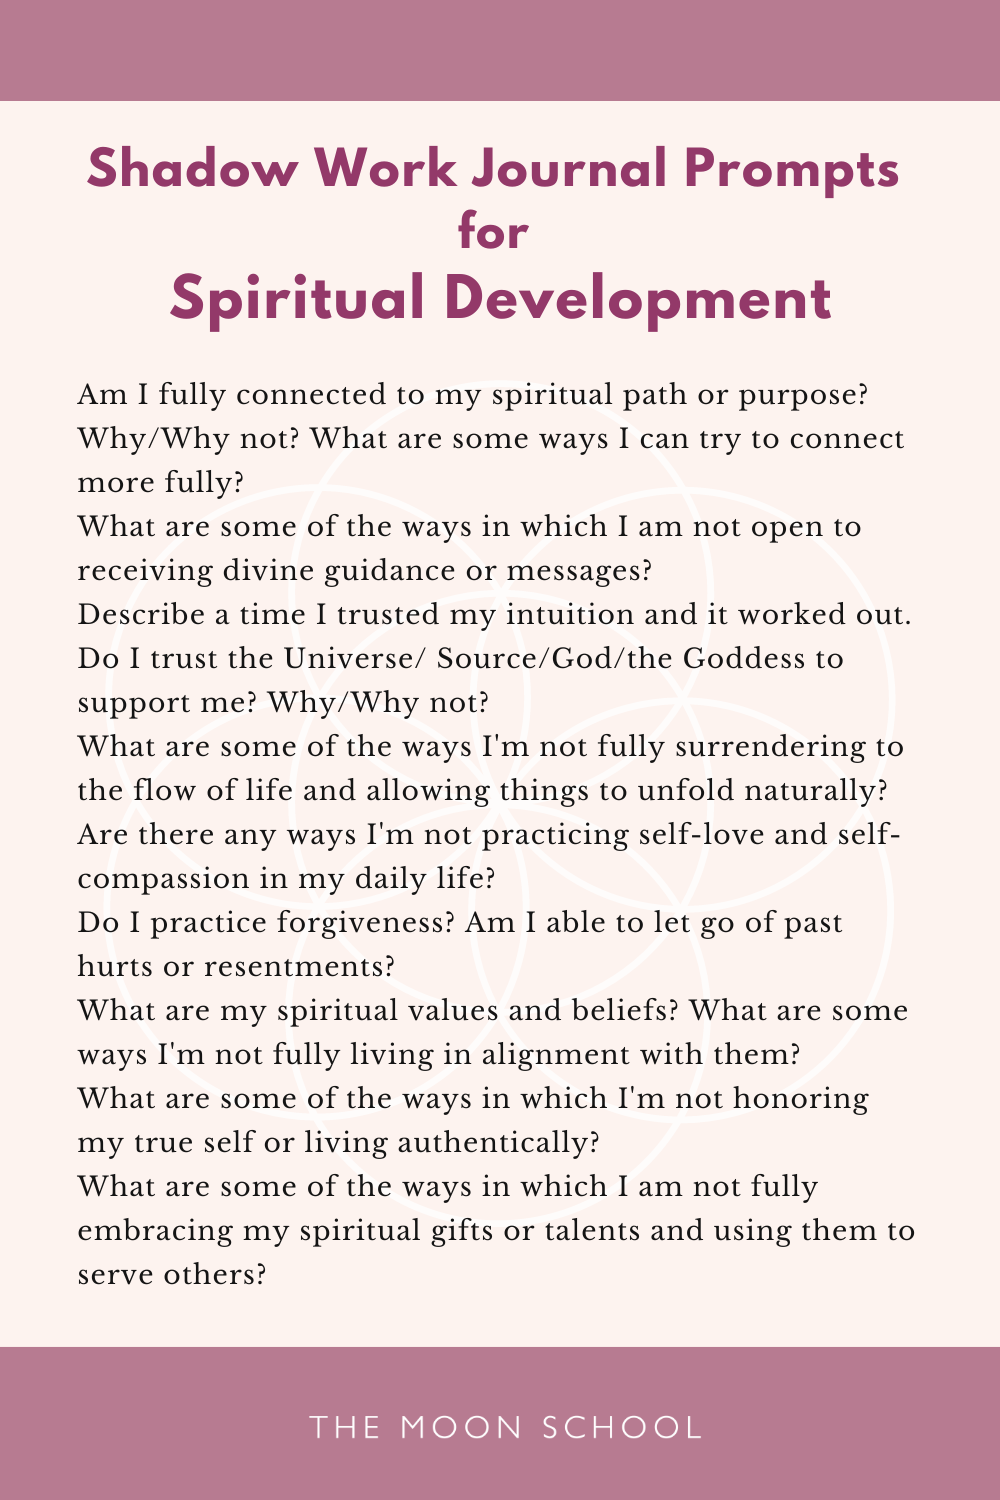 List of 10 free Journal Prompts for Spiritual Development